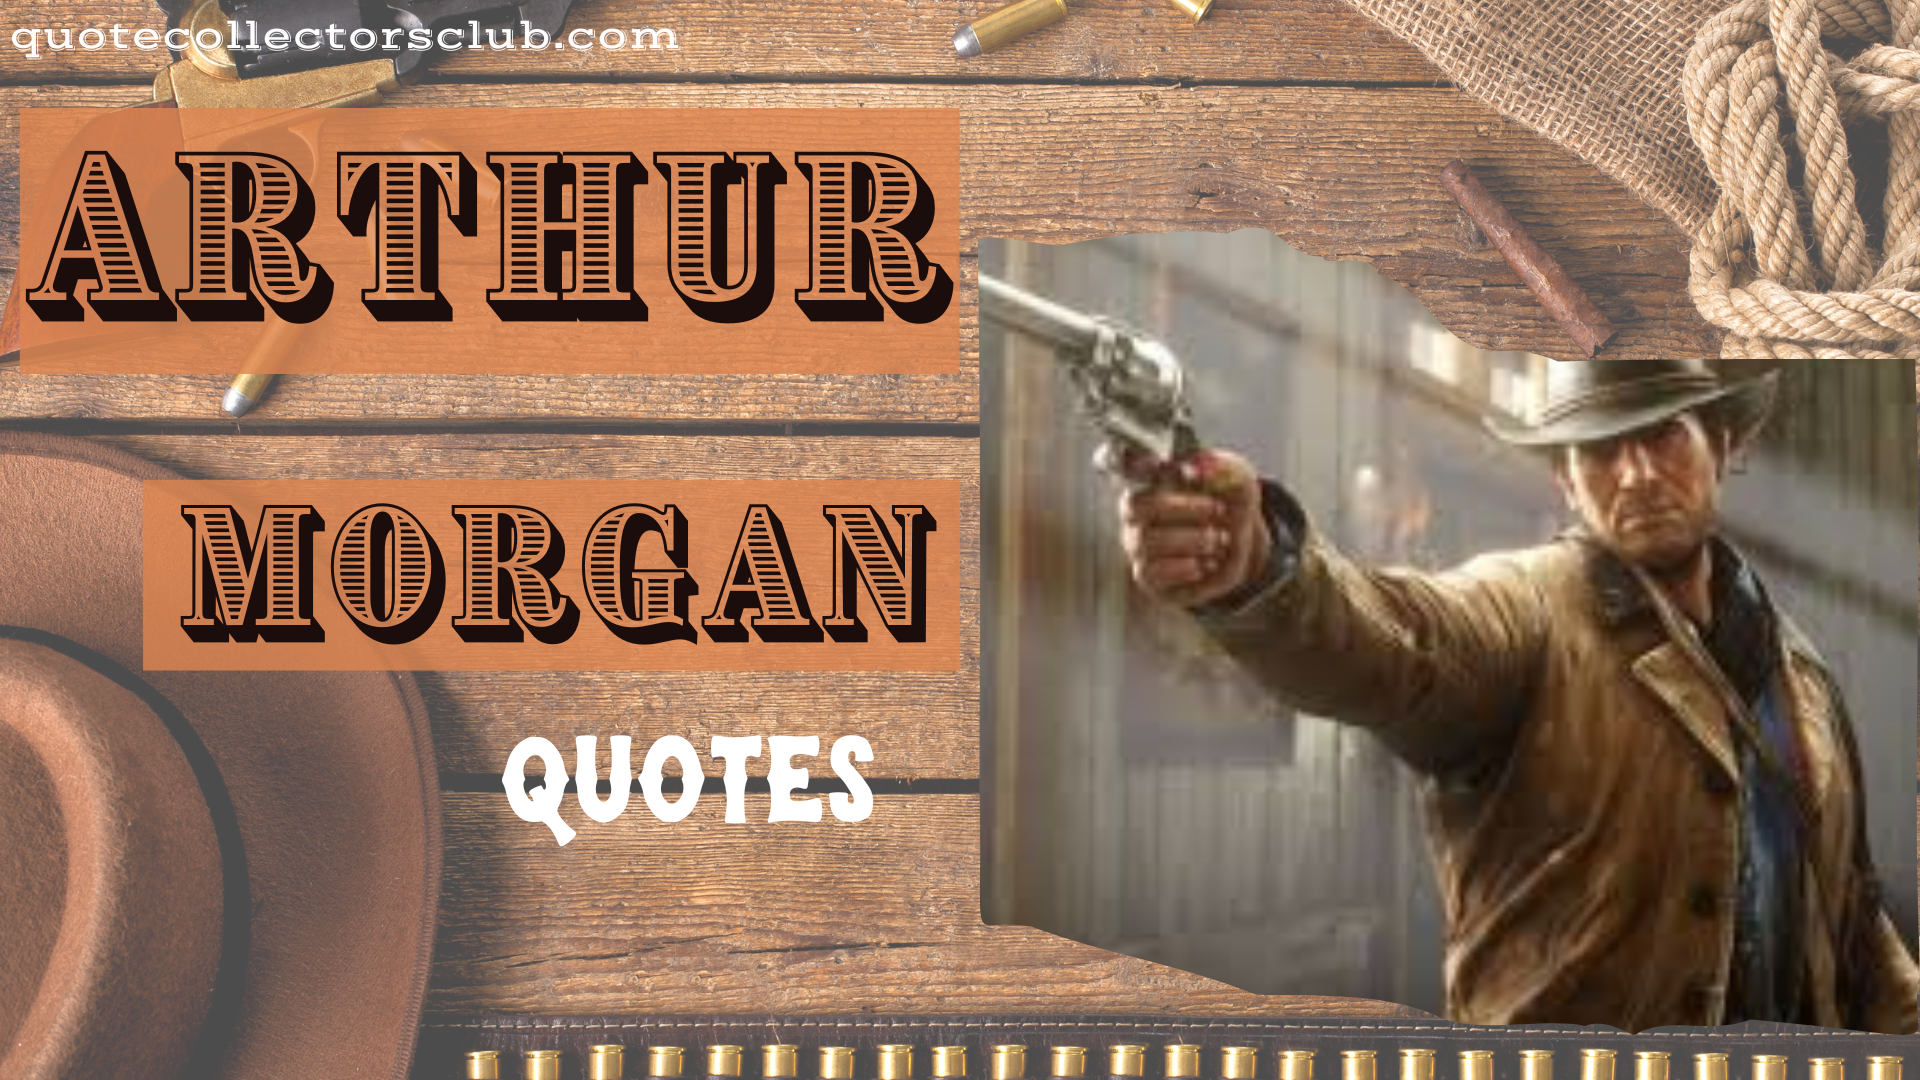 arthur morgan quotes